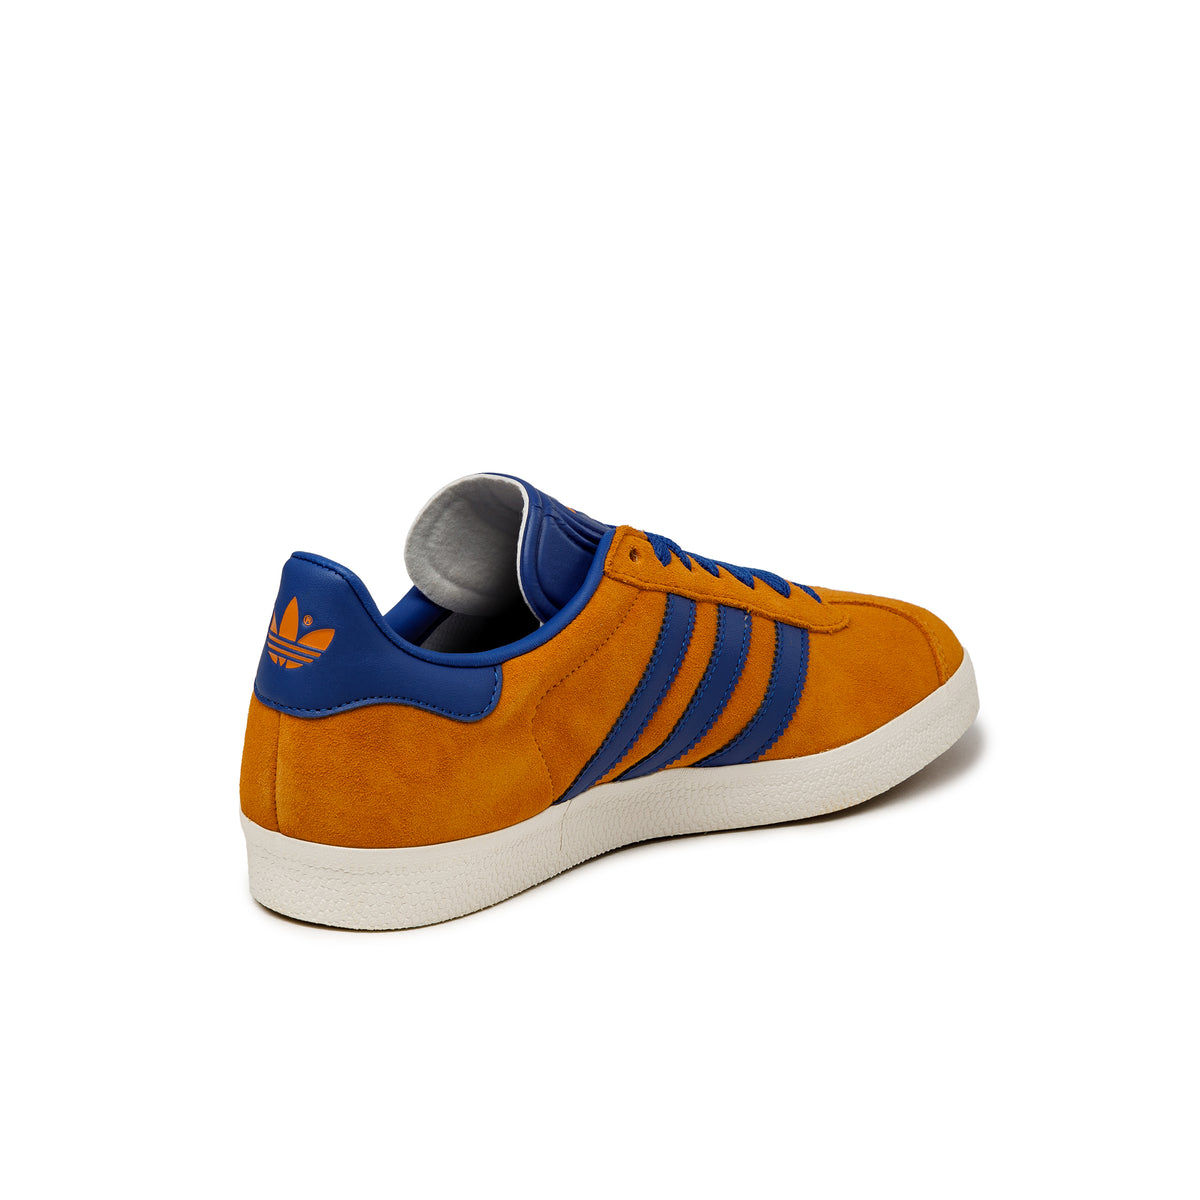 Adidas Gazelle Bold Orange / Royal Blue / Chalk White